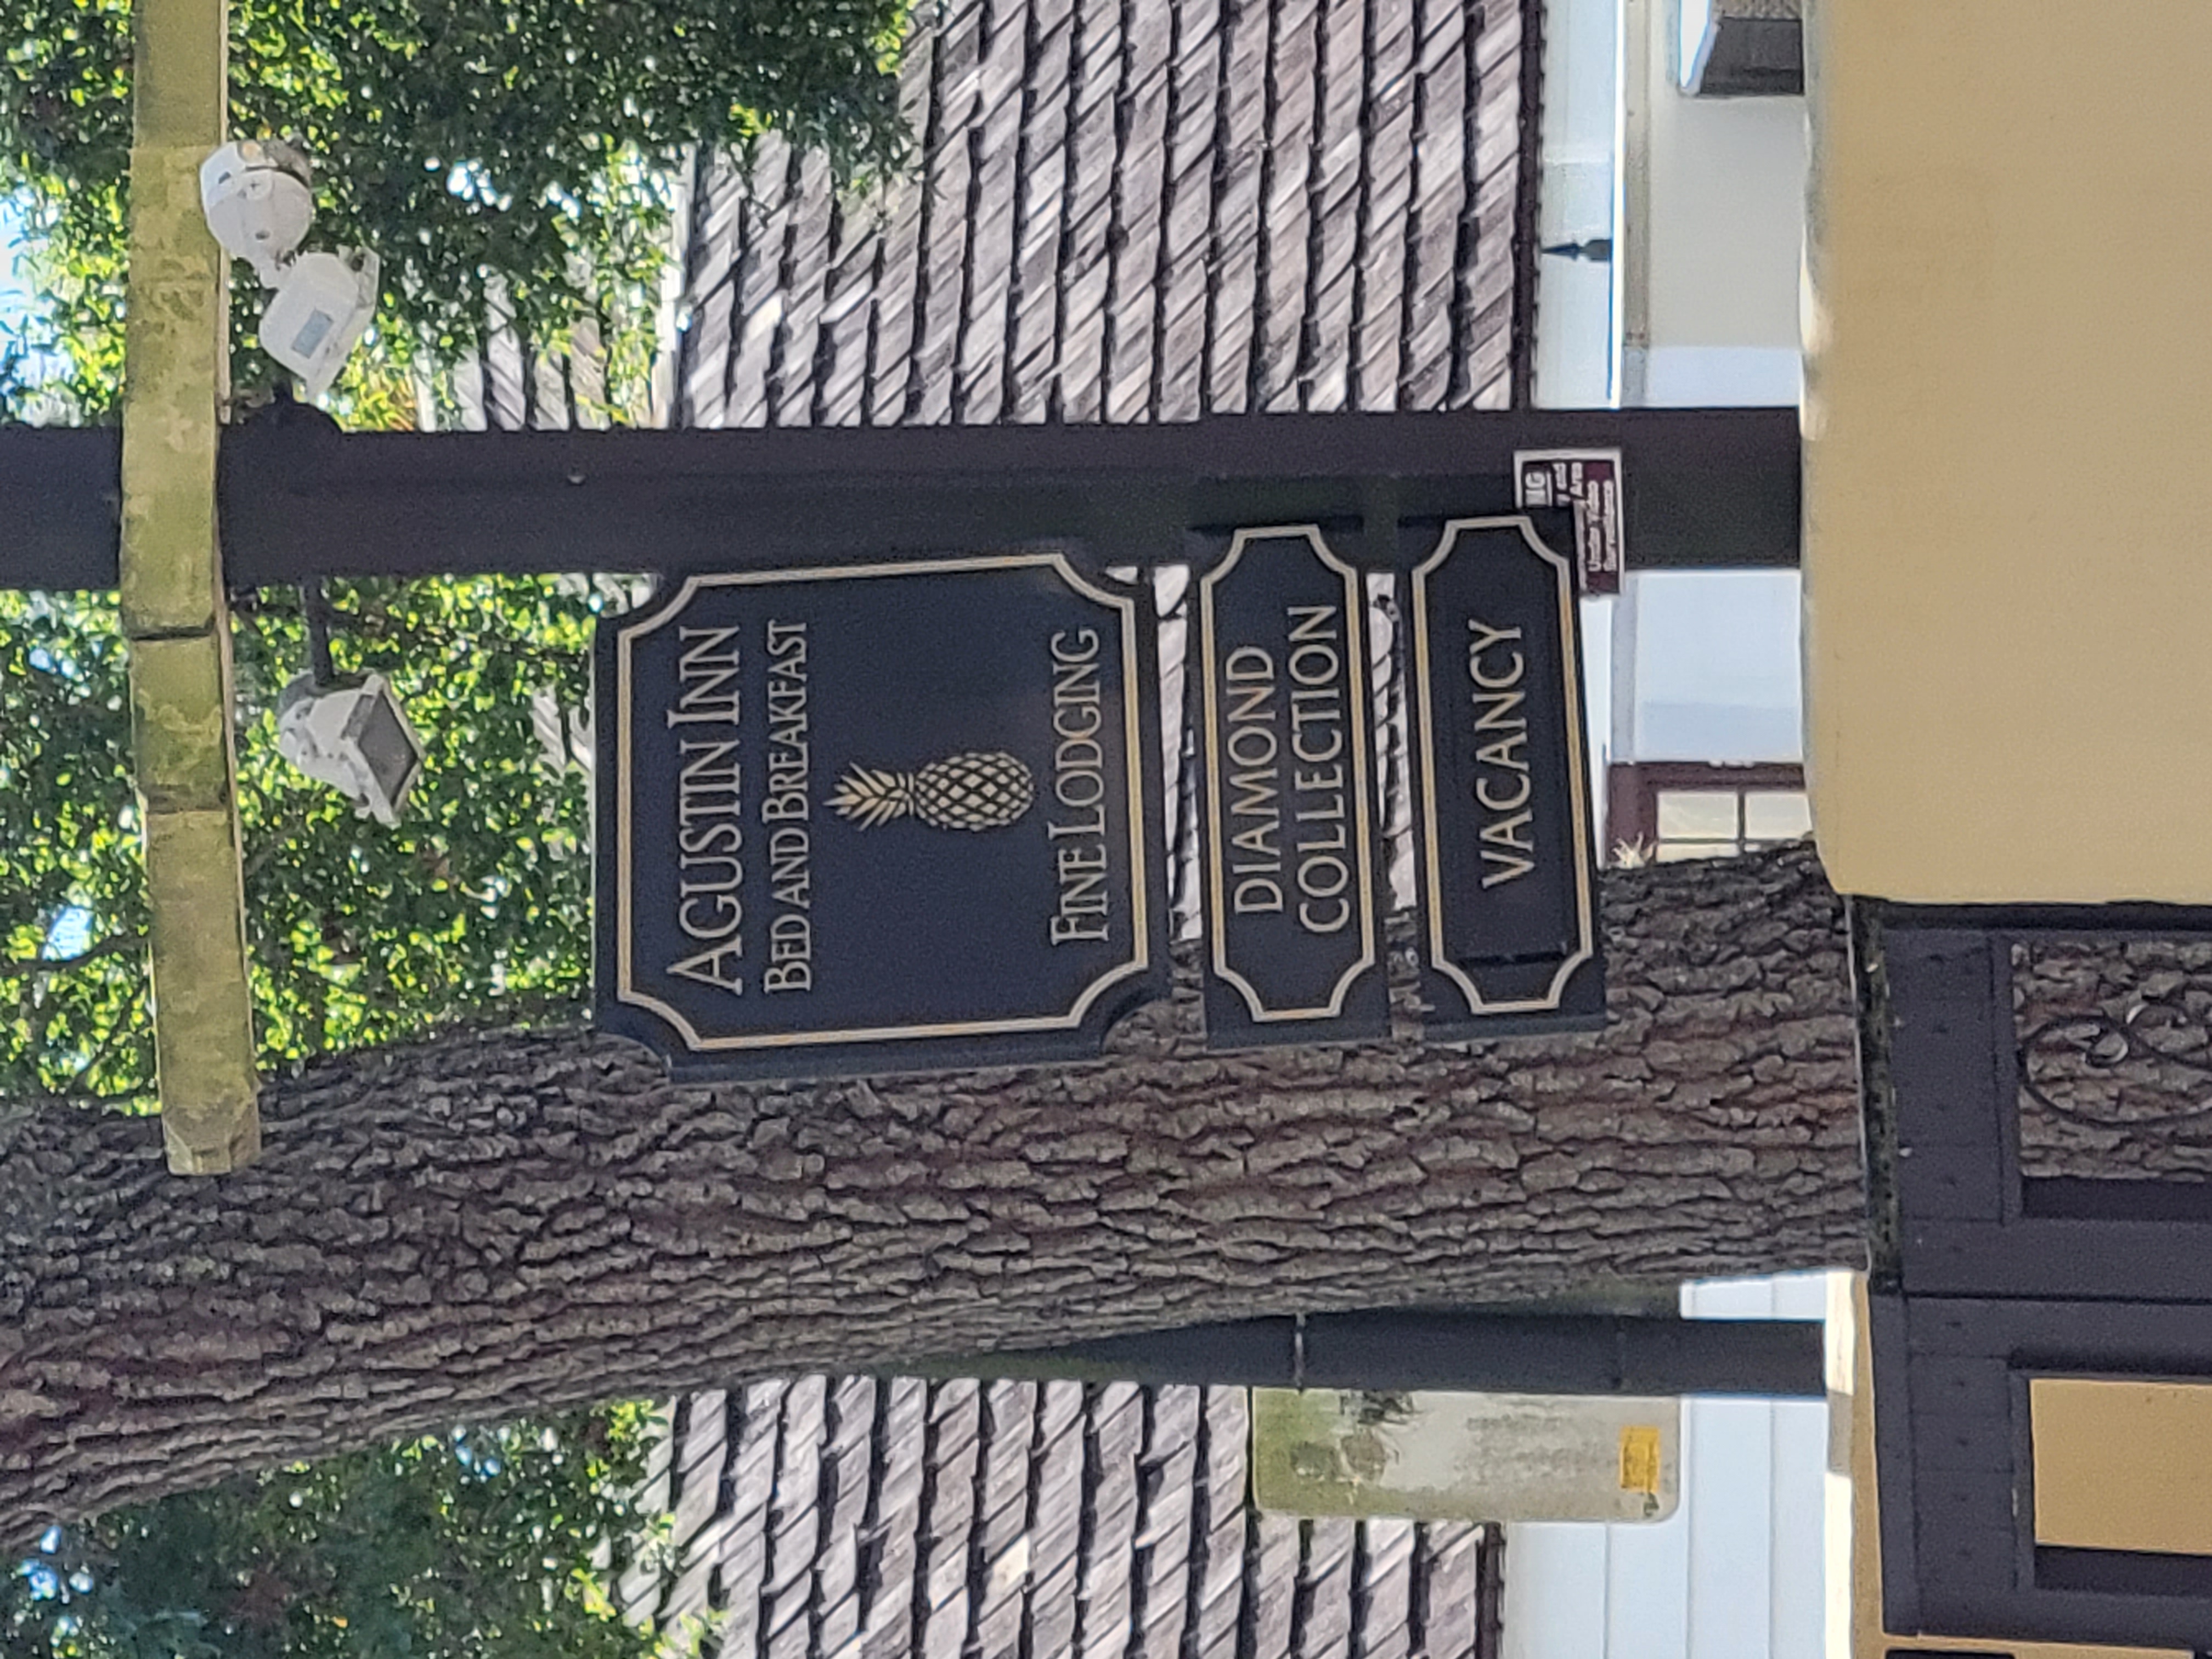 Road sign outside the Agustin Inn, Florida